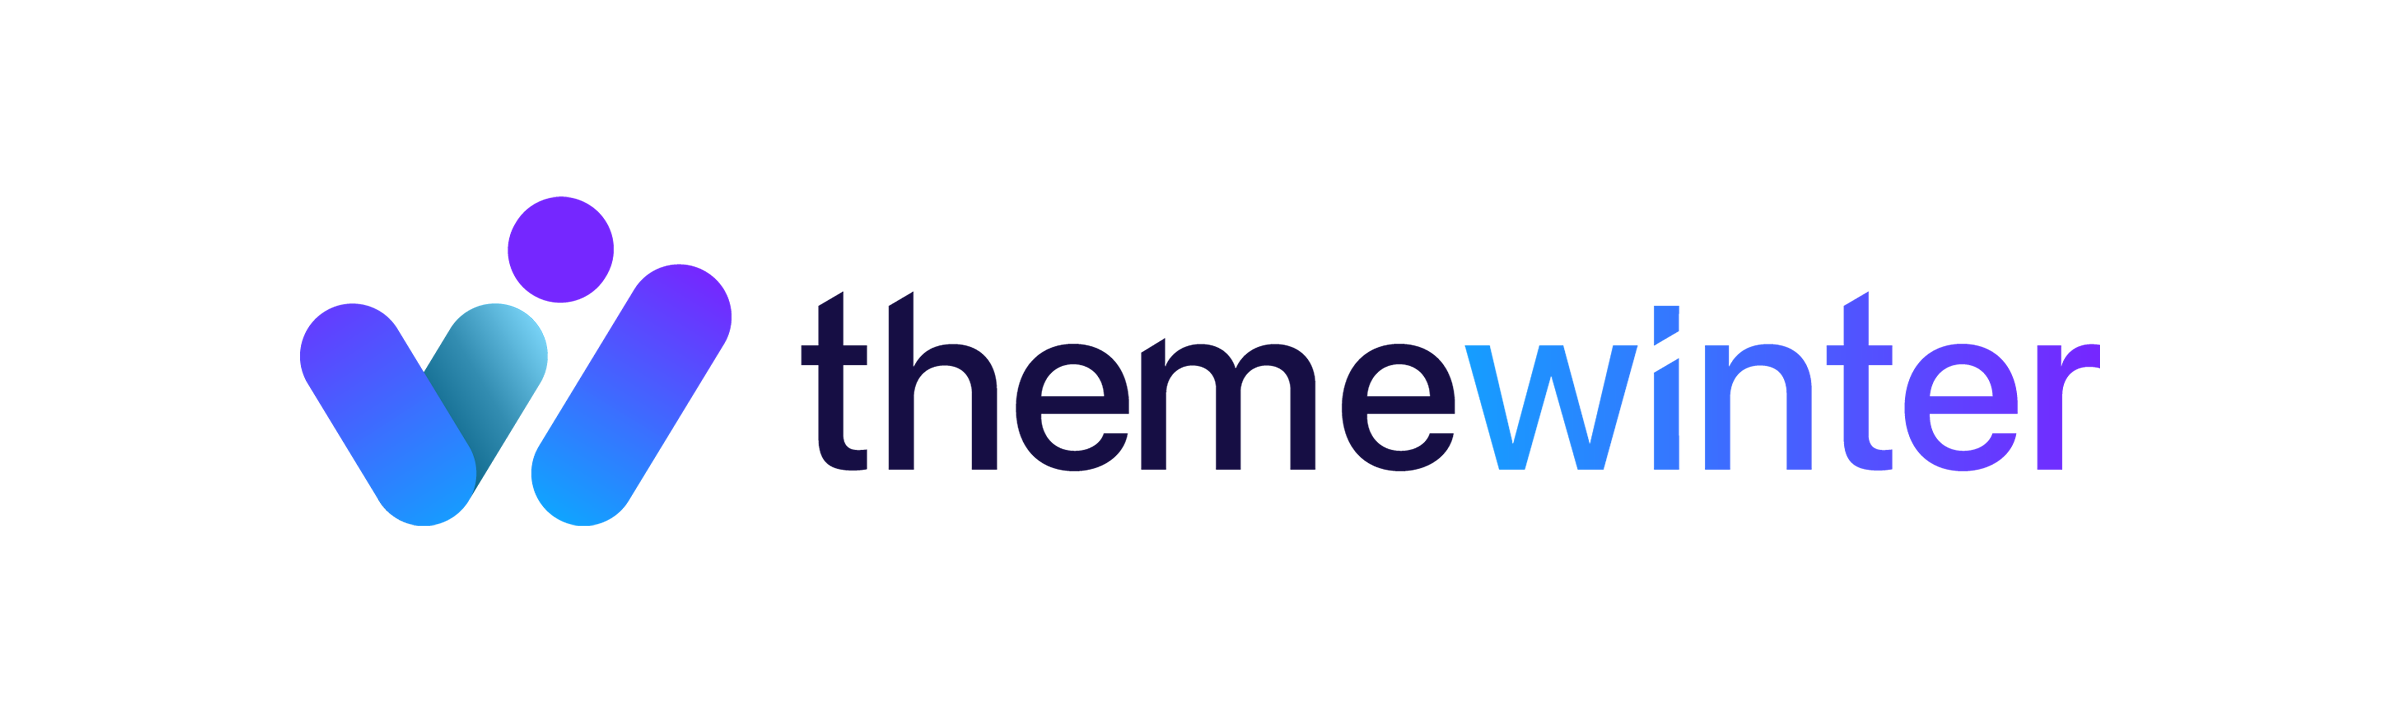 ThemeWinter logo